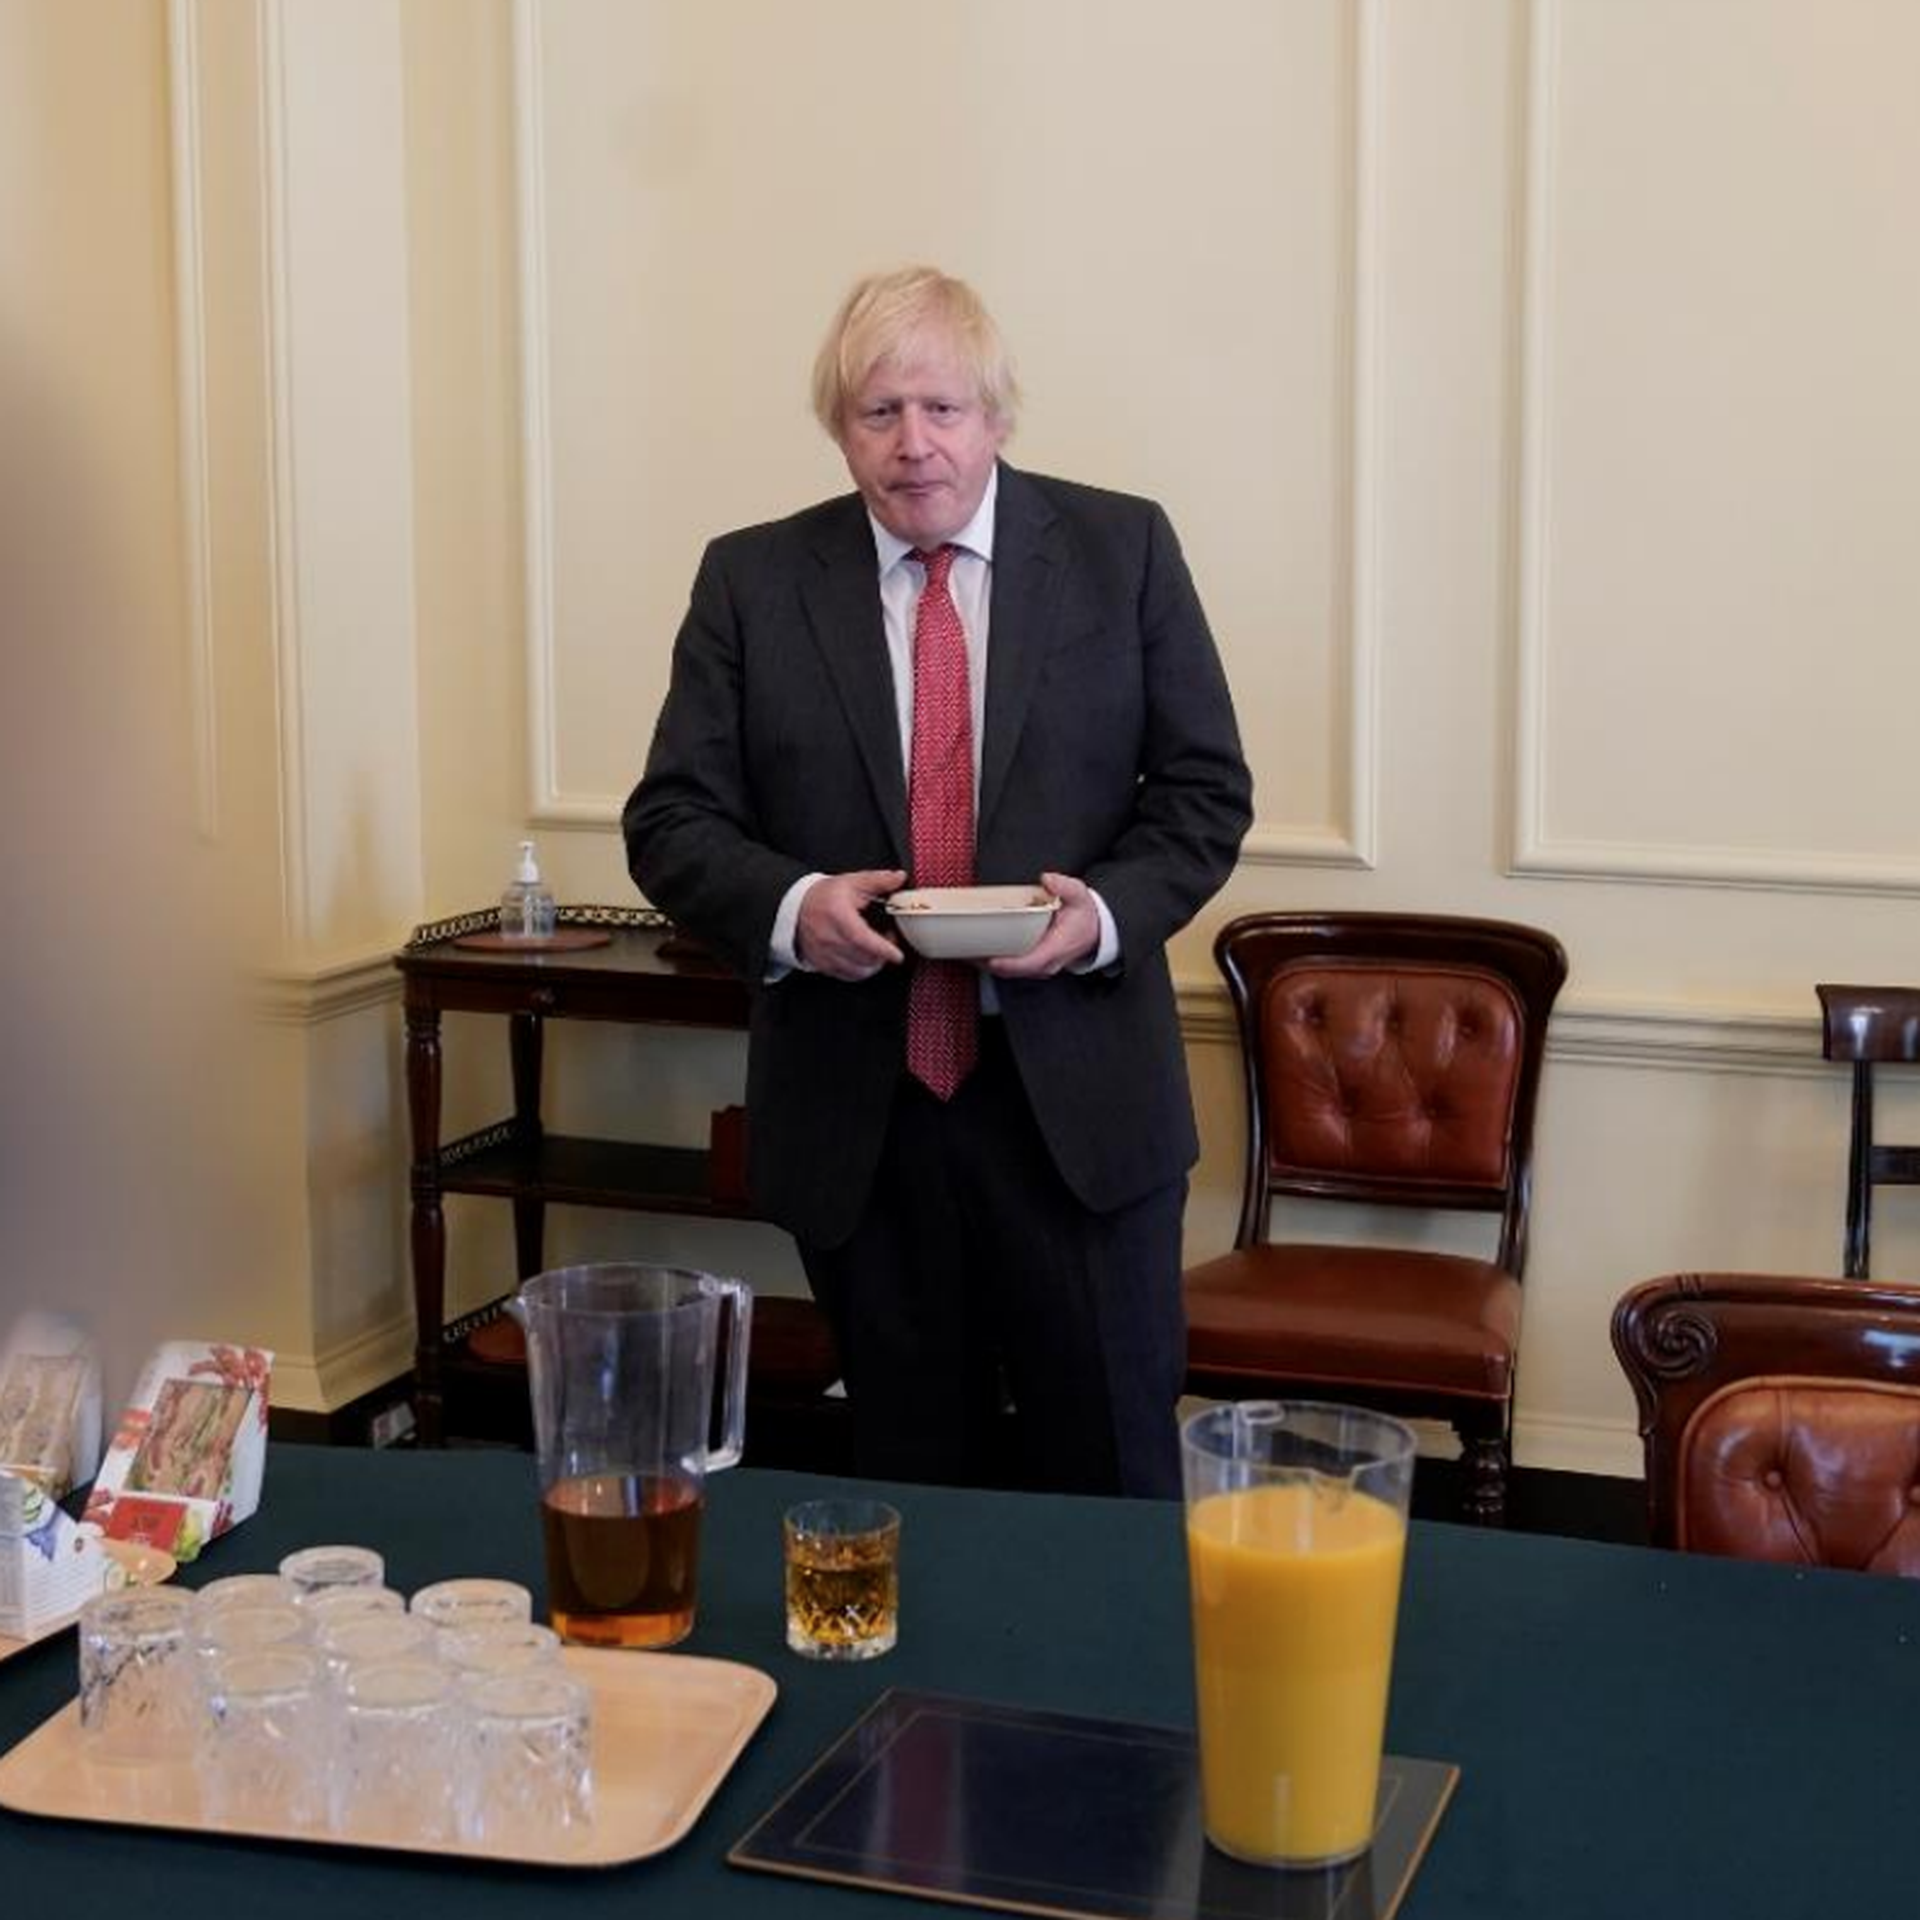 A photo showing Boris Johnson from Sue Gray's report